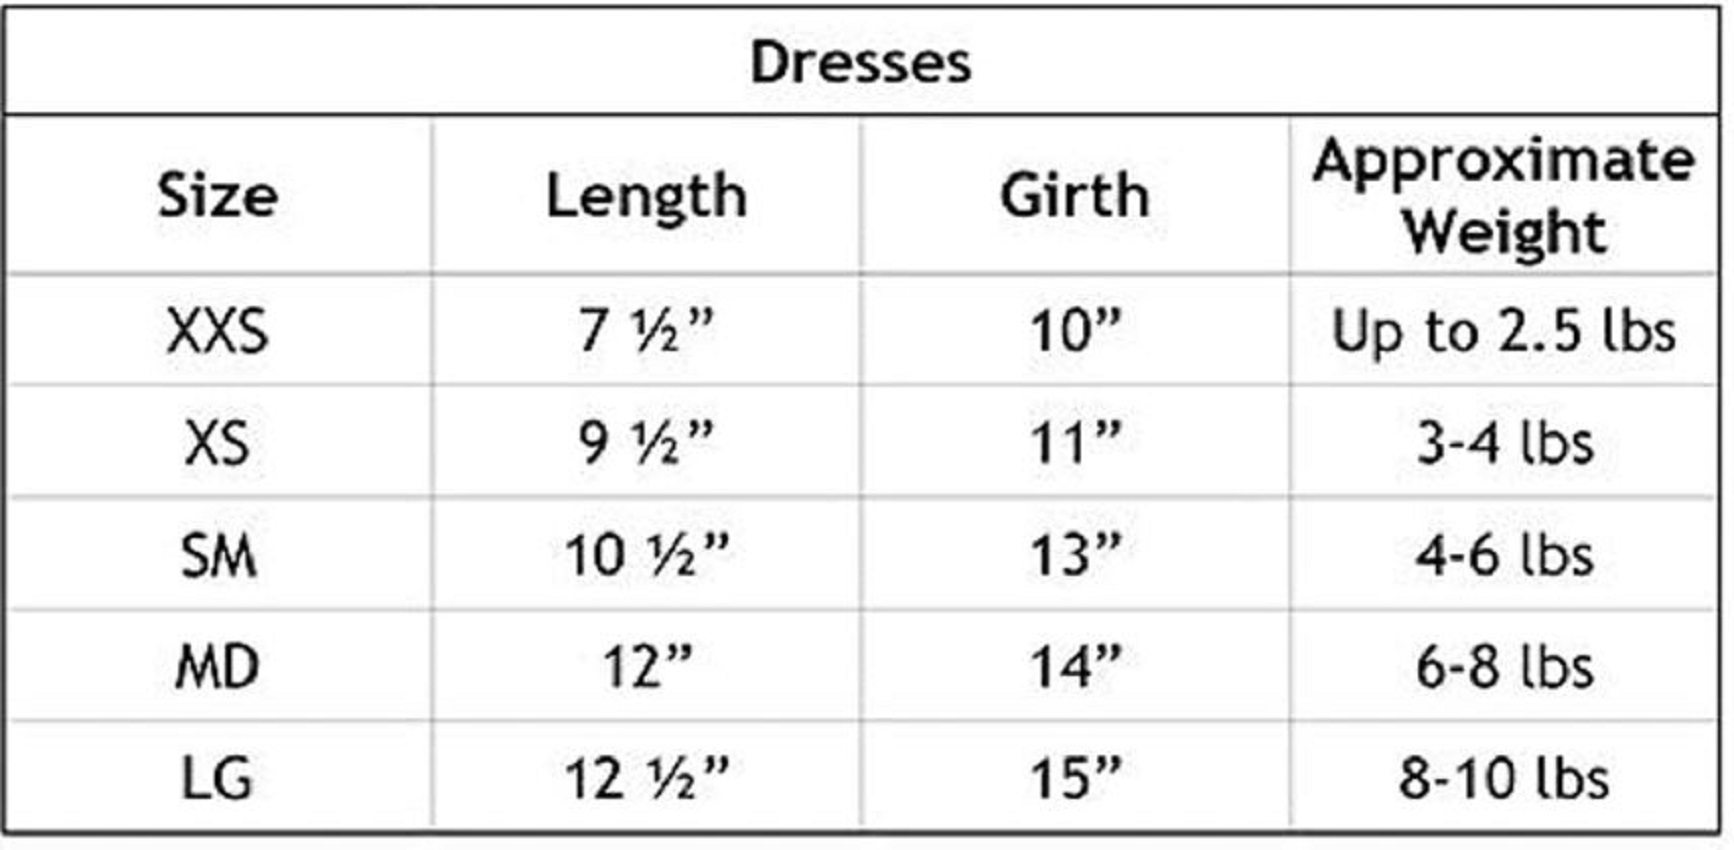 dress-sizes.jpg